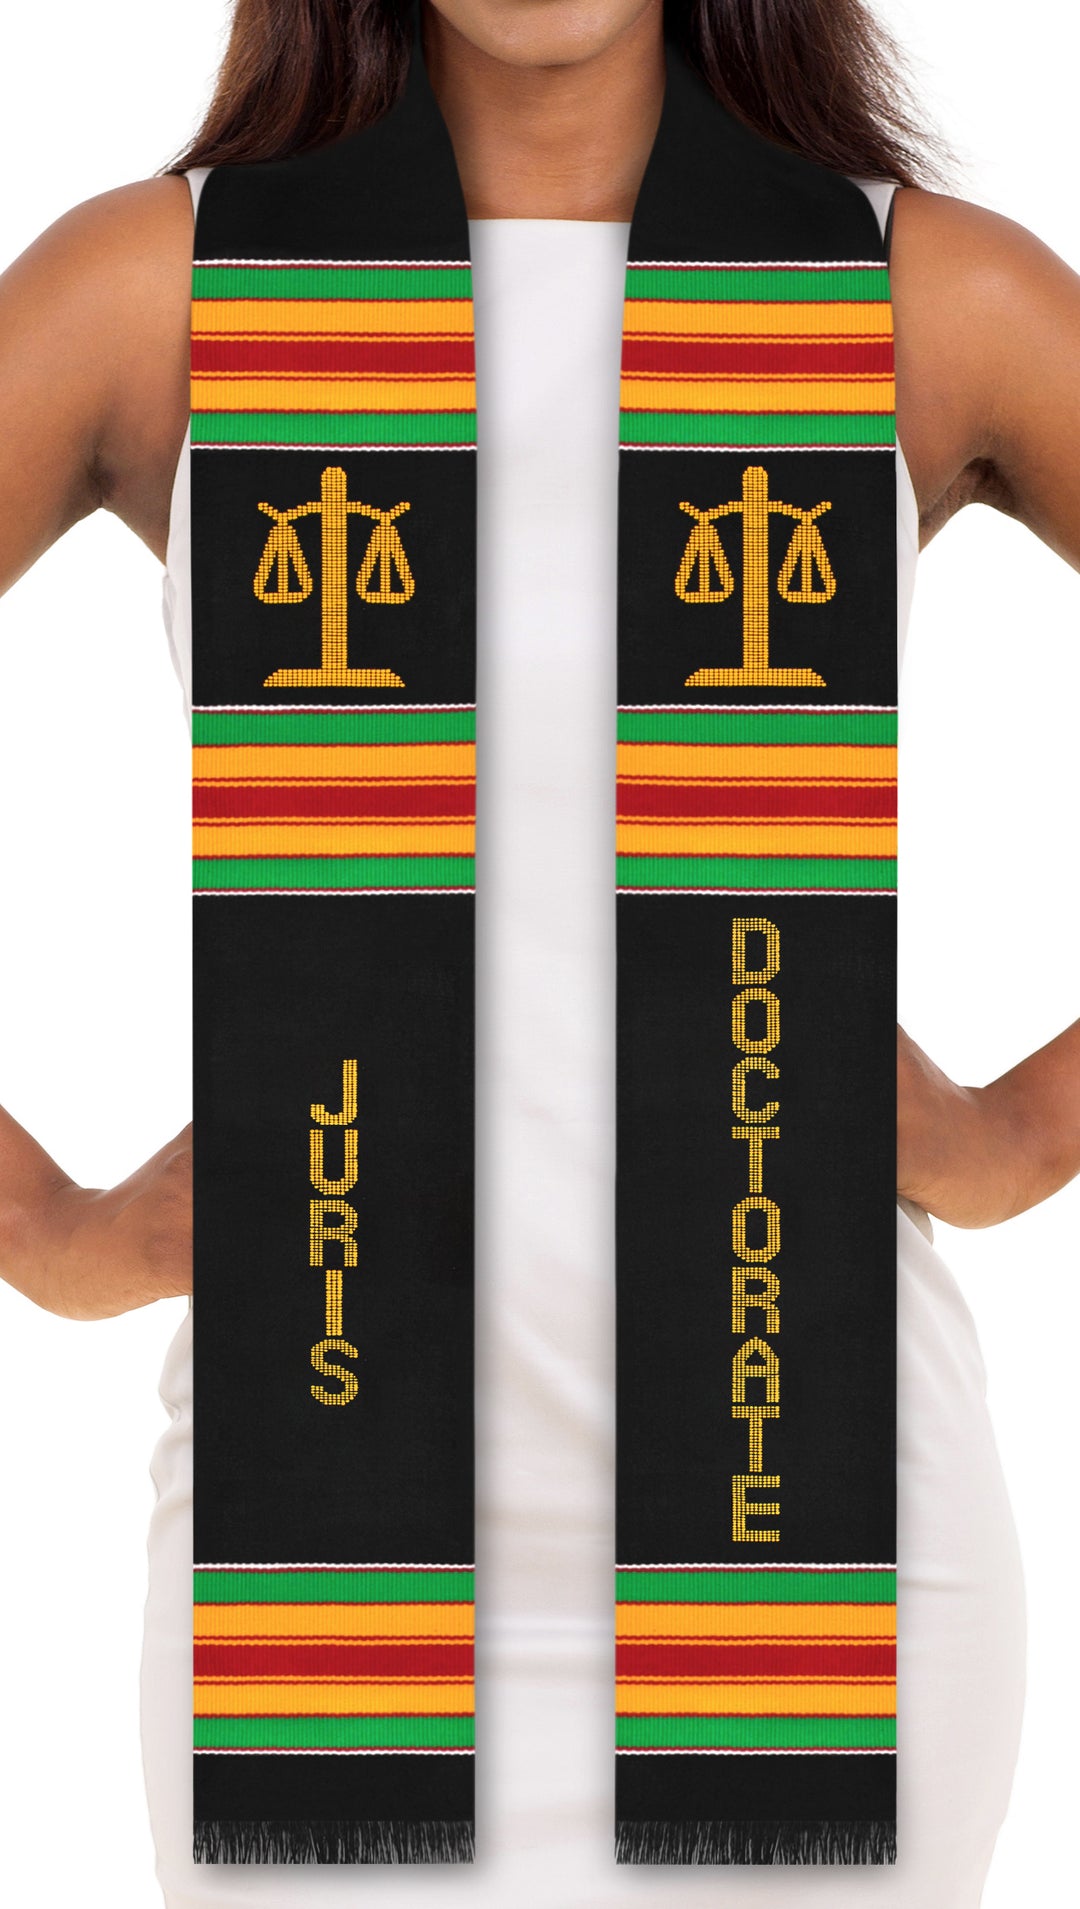 Juris Doctorate Authentic Handwoven Kente Cloth Graduation Stole